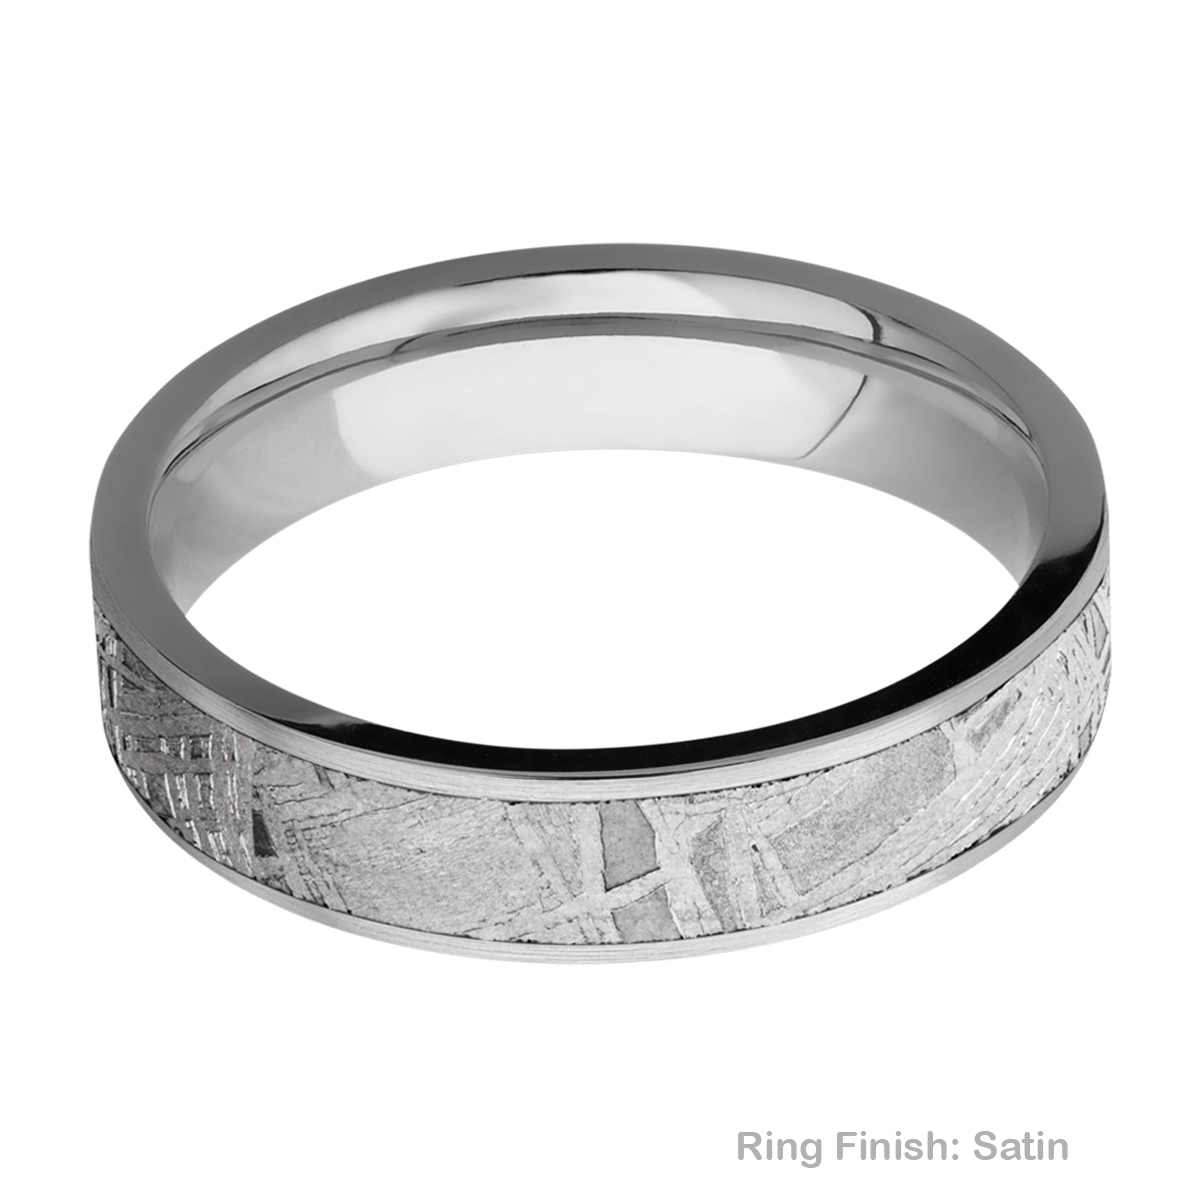 Lashbrook 5F14/METEORITE Titanium Wedding Ring or Band